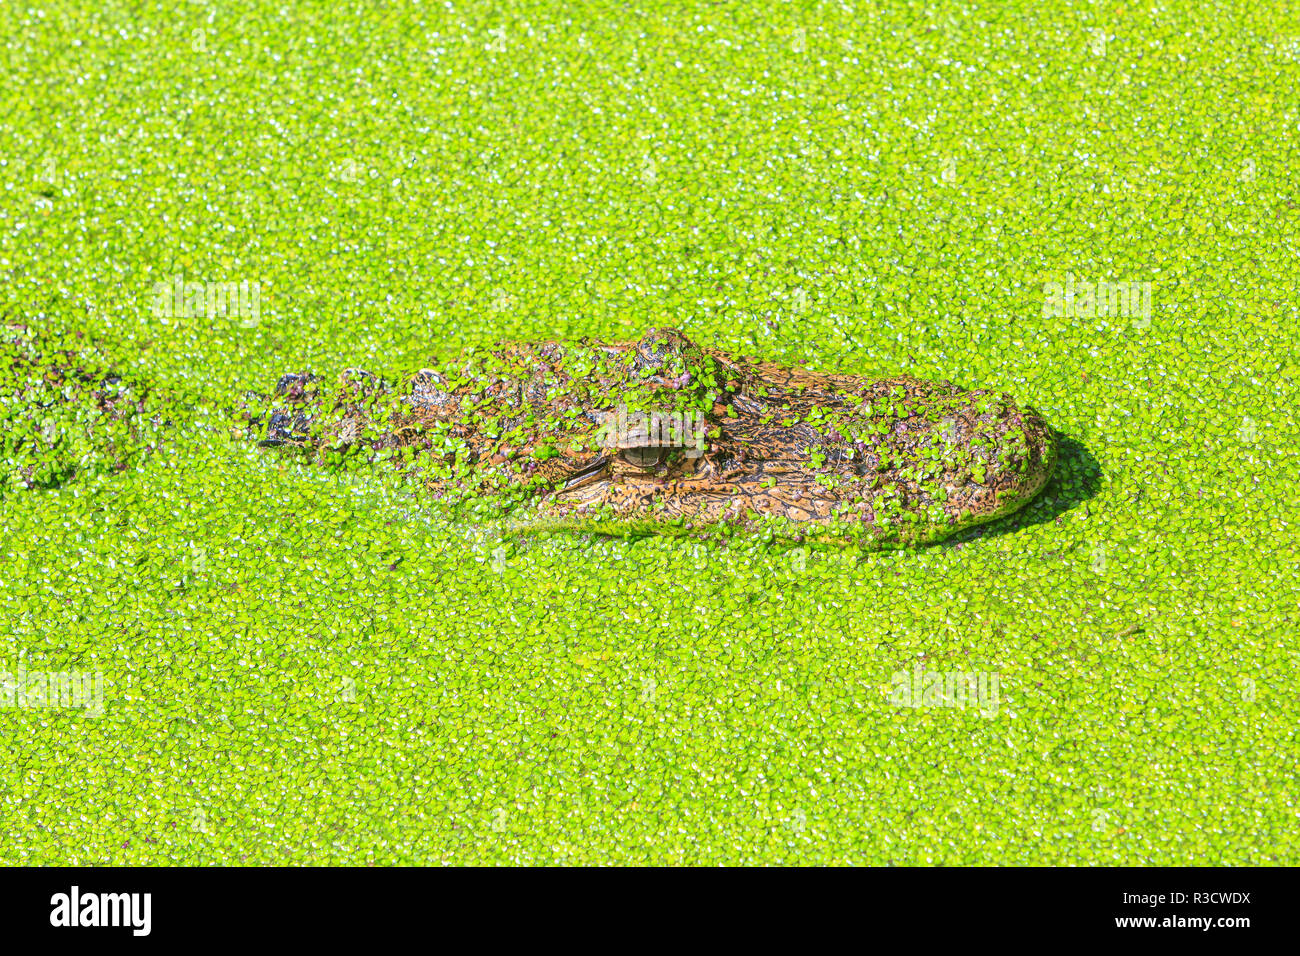 Alligator fast versunken in Wasserlinsen. New Orleans, Louisiana, USA Stockfoto